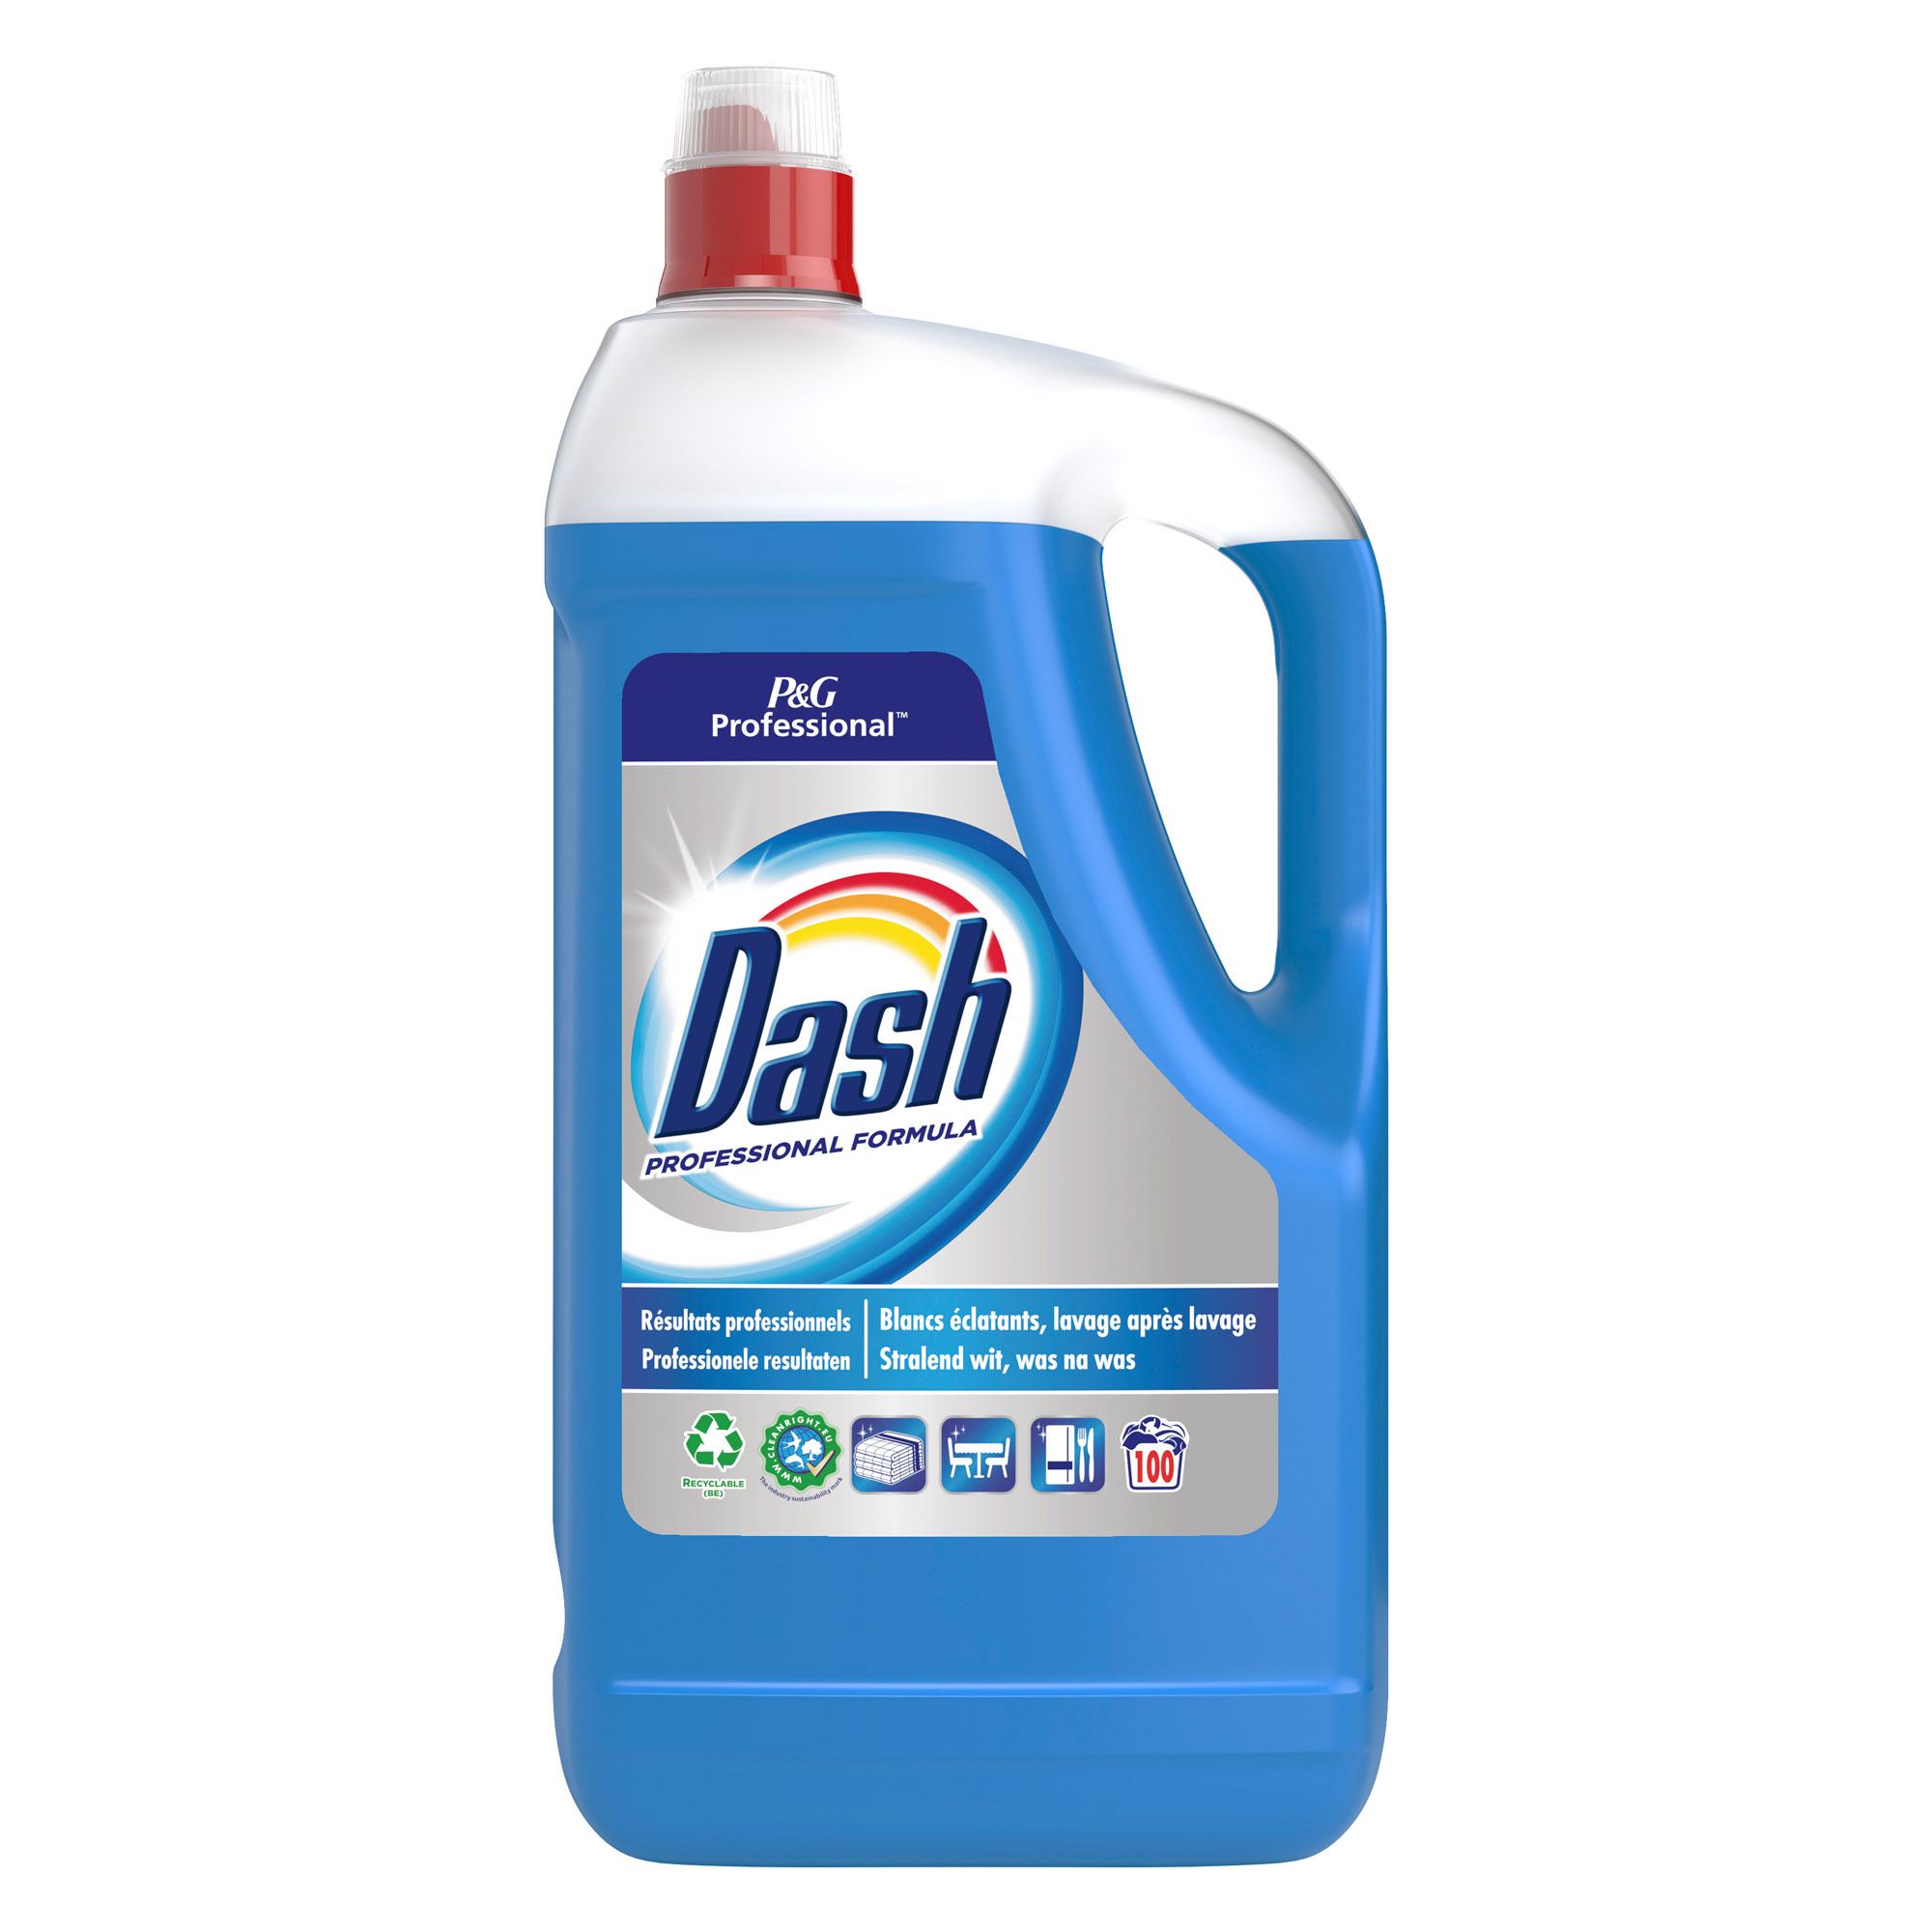 Dash - Lessive liquide 36 doses (1,8L)